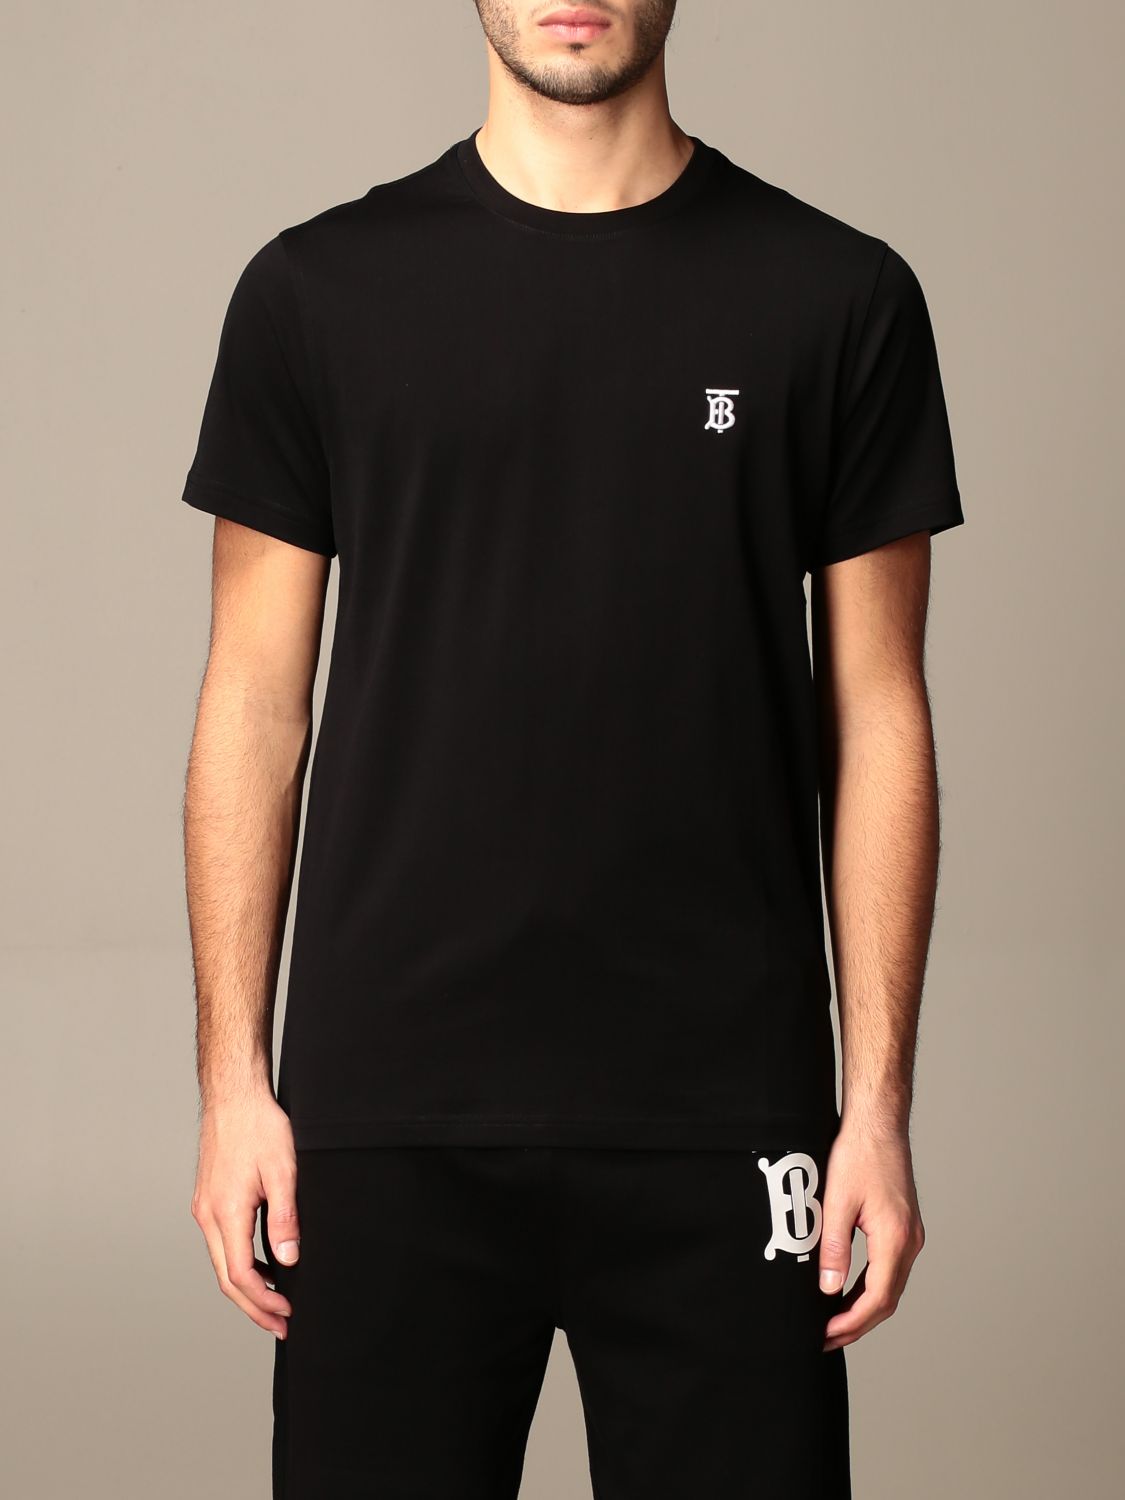 BURBERRY: Parker T-shirt with TB monogram | T-Shirt Burberry Men Black ...